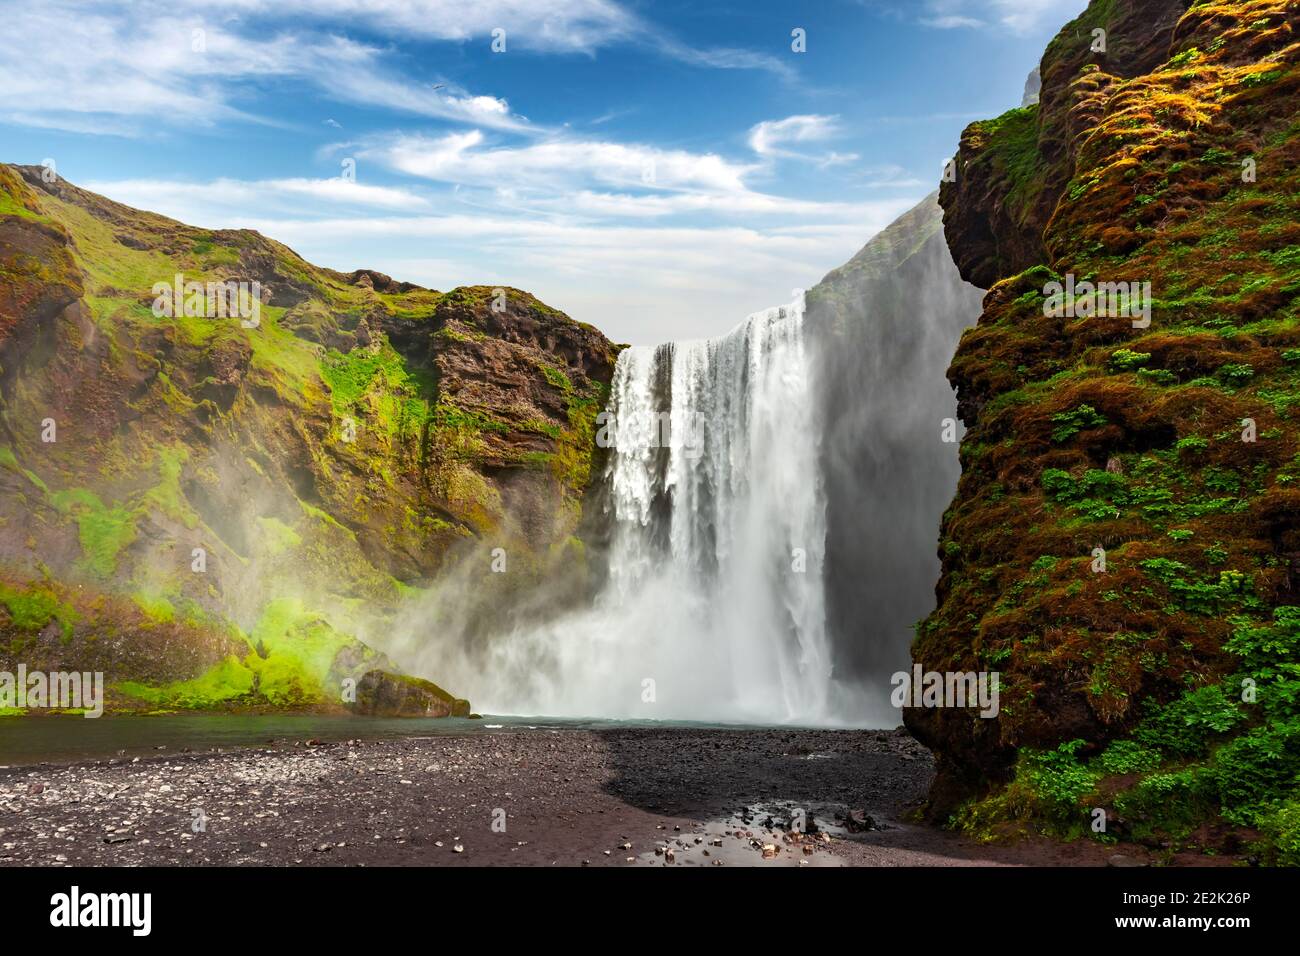 Unglaublicher Blick auf den berühmten Wasserfall Skogafoss am Skoga-Fluss. Island, Europa. Landschaftsfotografie Stockfoto